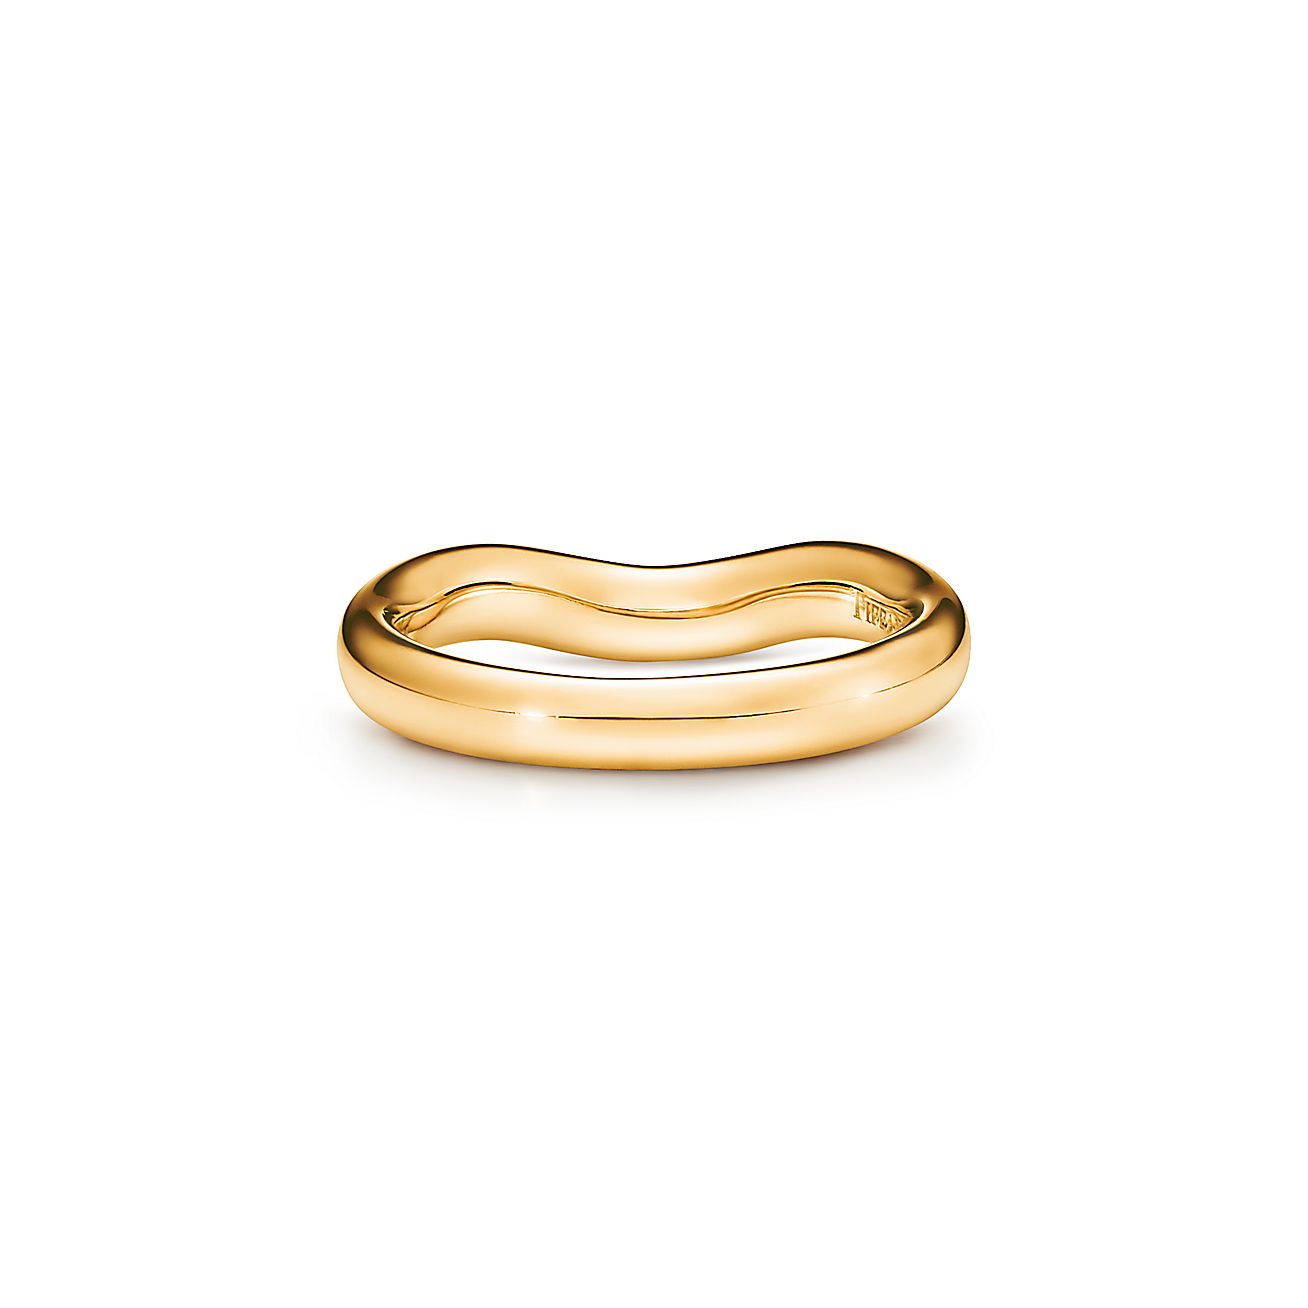 Tiffany & Co. Elsa Peretti Platinum Band Ring with One Diamond Size 5.5 —  DeWitt's Diamond & Gold Exchange